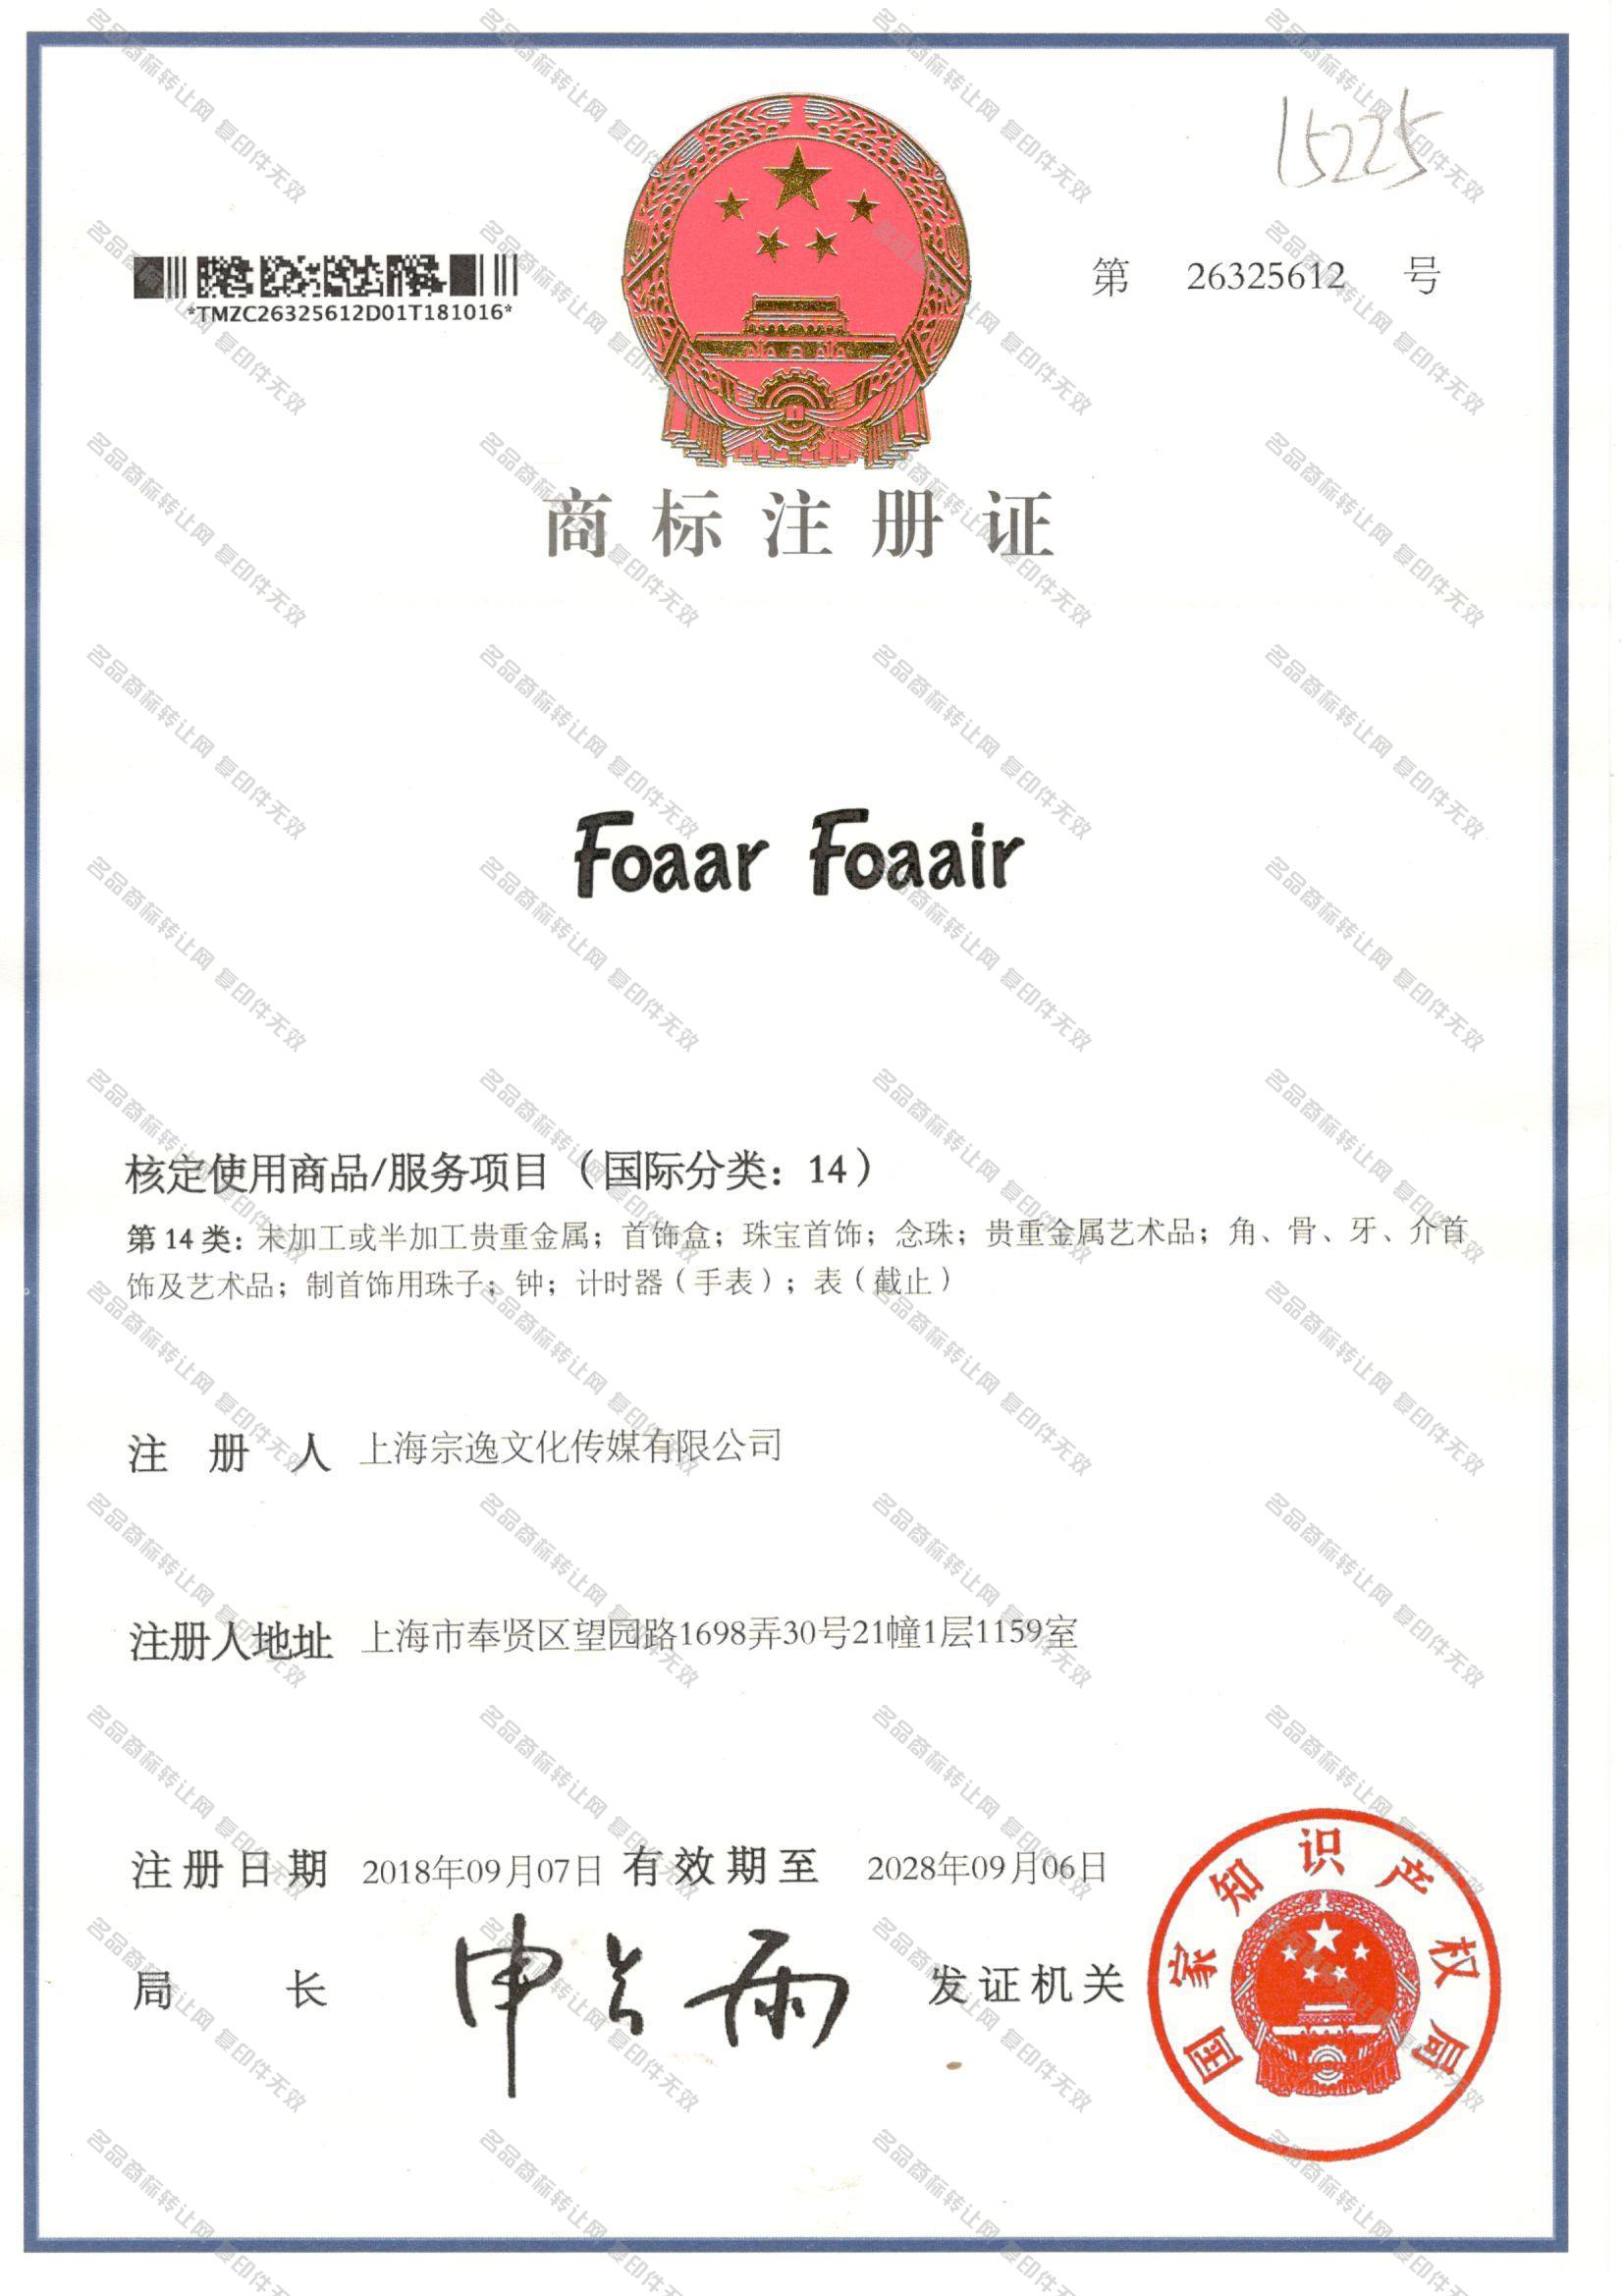 FOAAR FOAAIR注册证